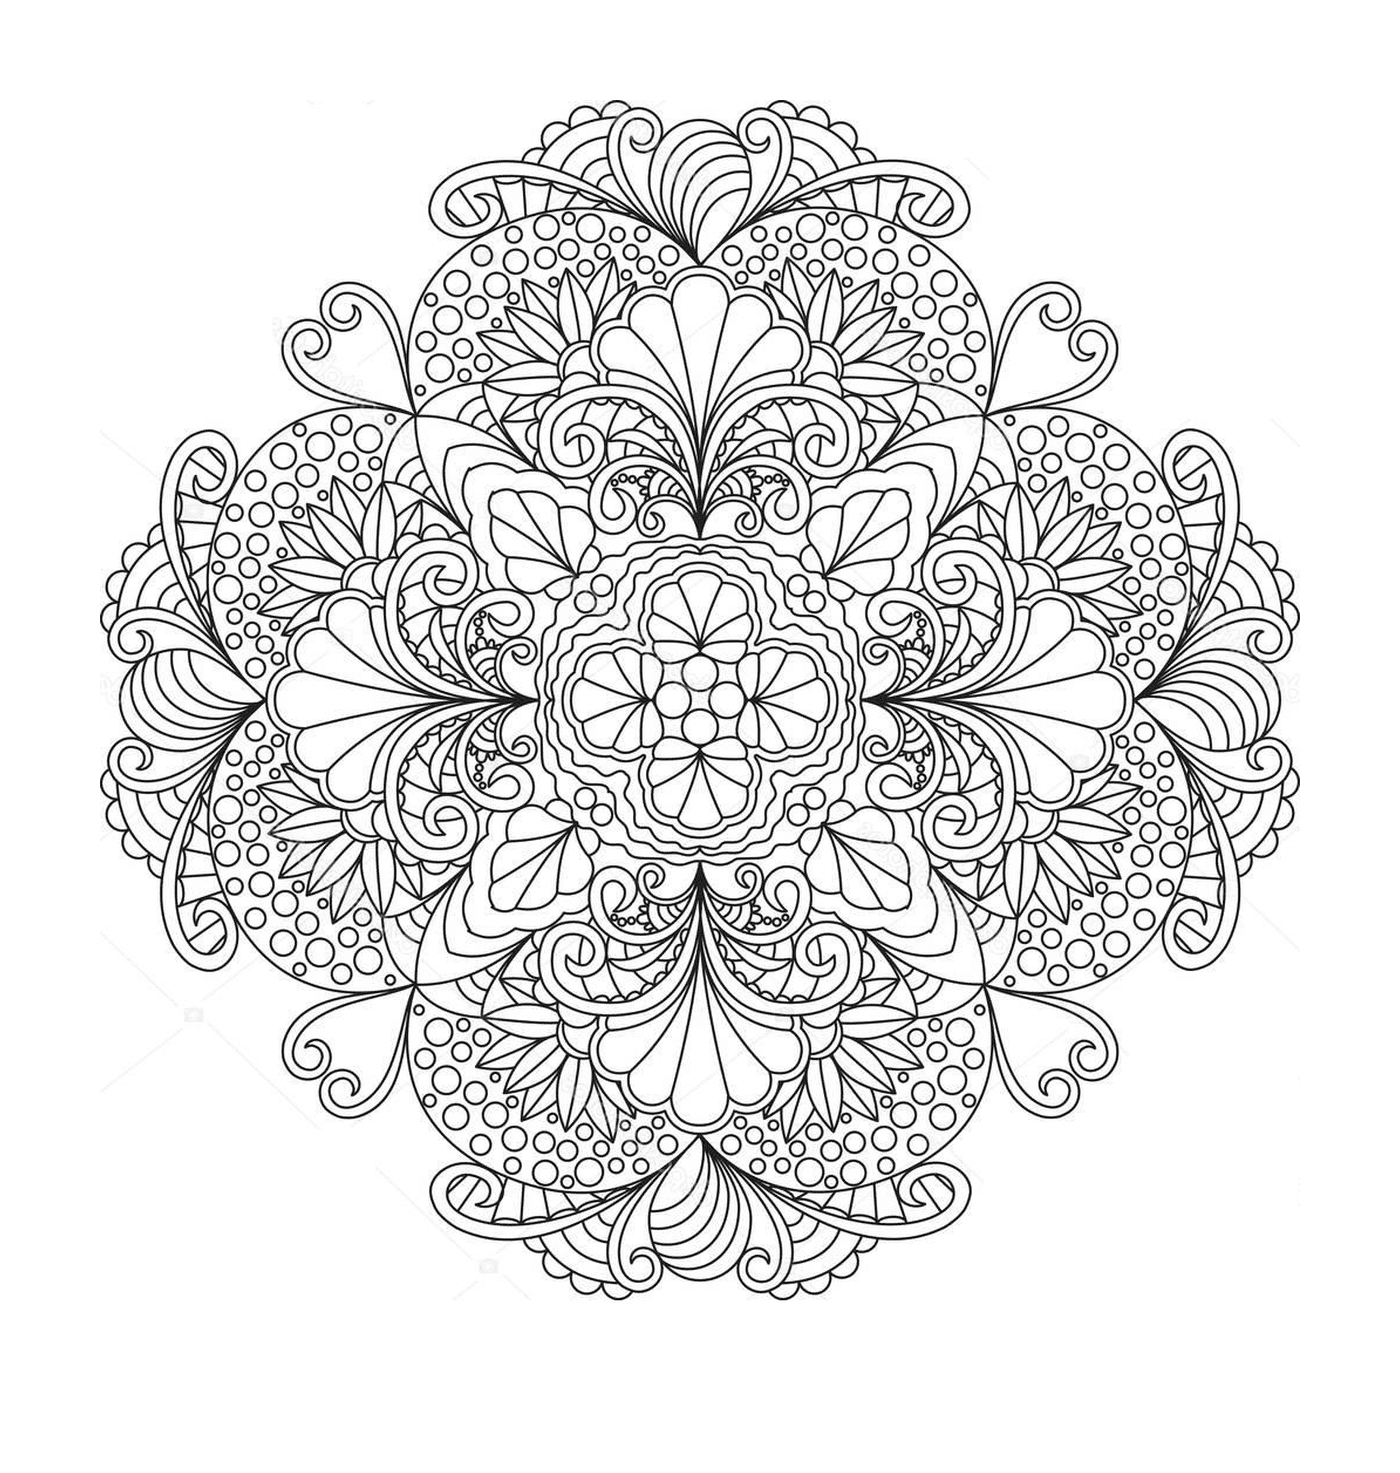  Mandala der Blumen 